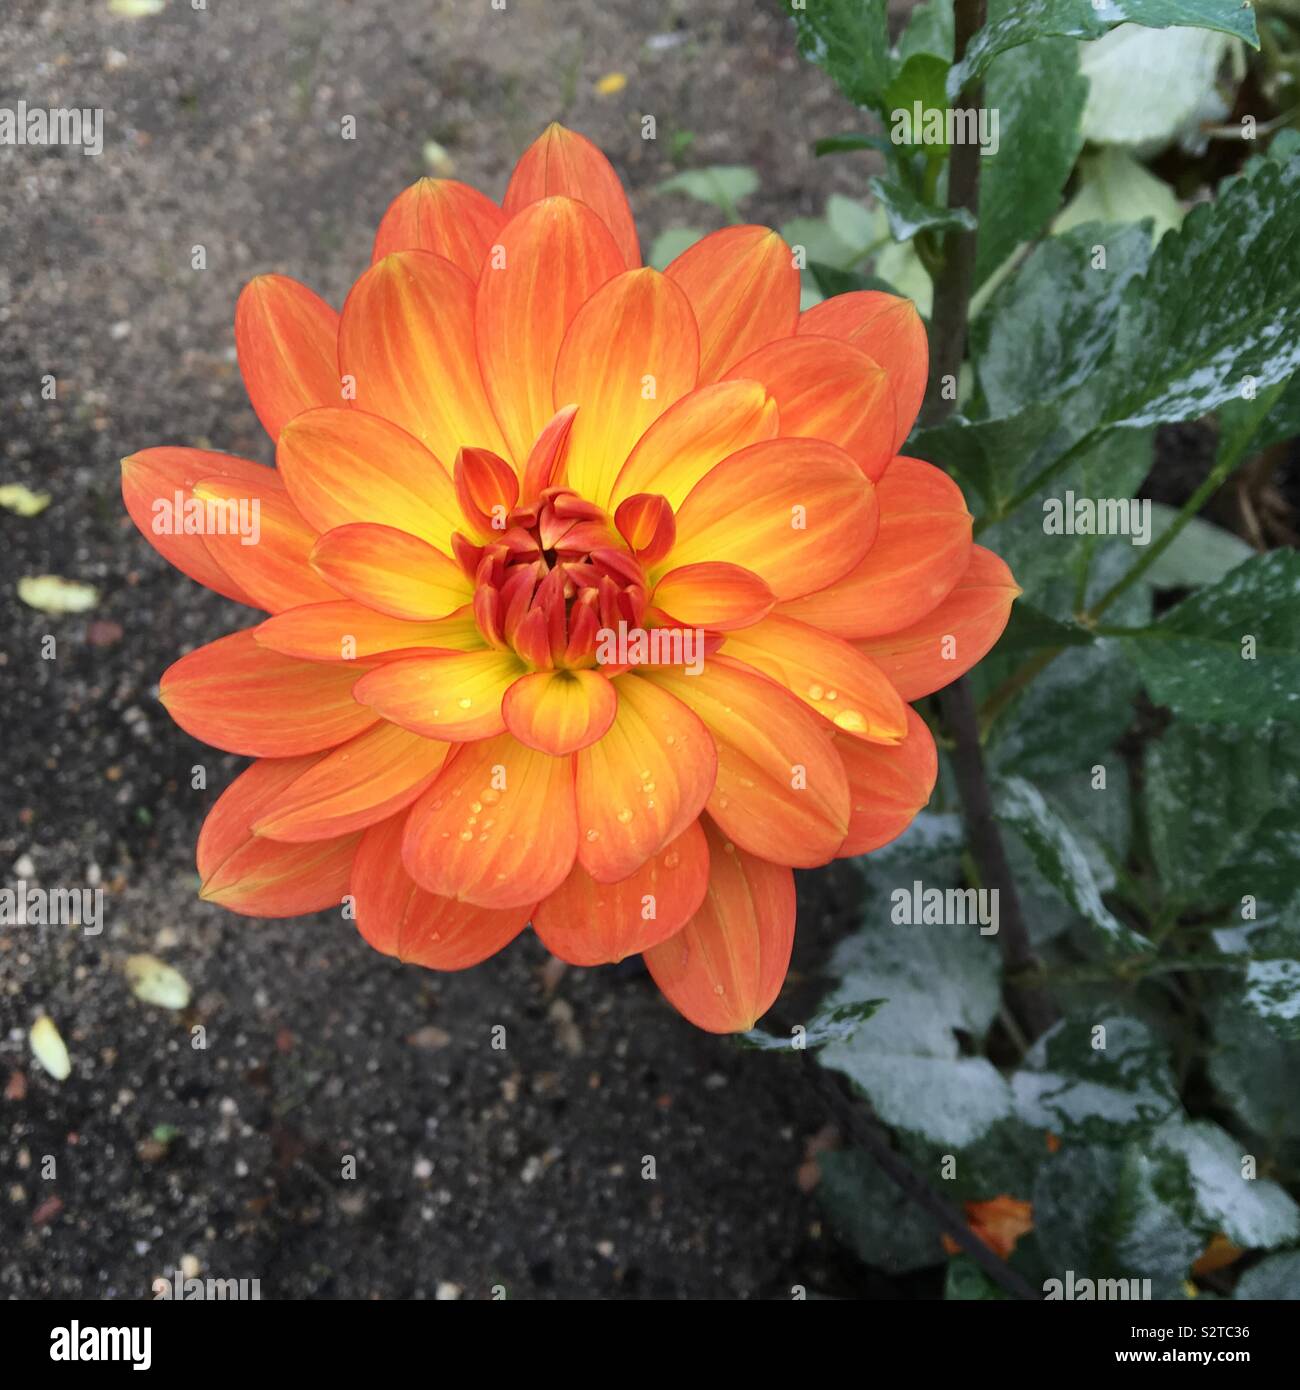 Orange Dahlia flower blooming in summer garden Stock Photo